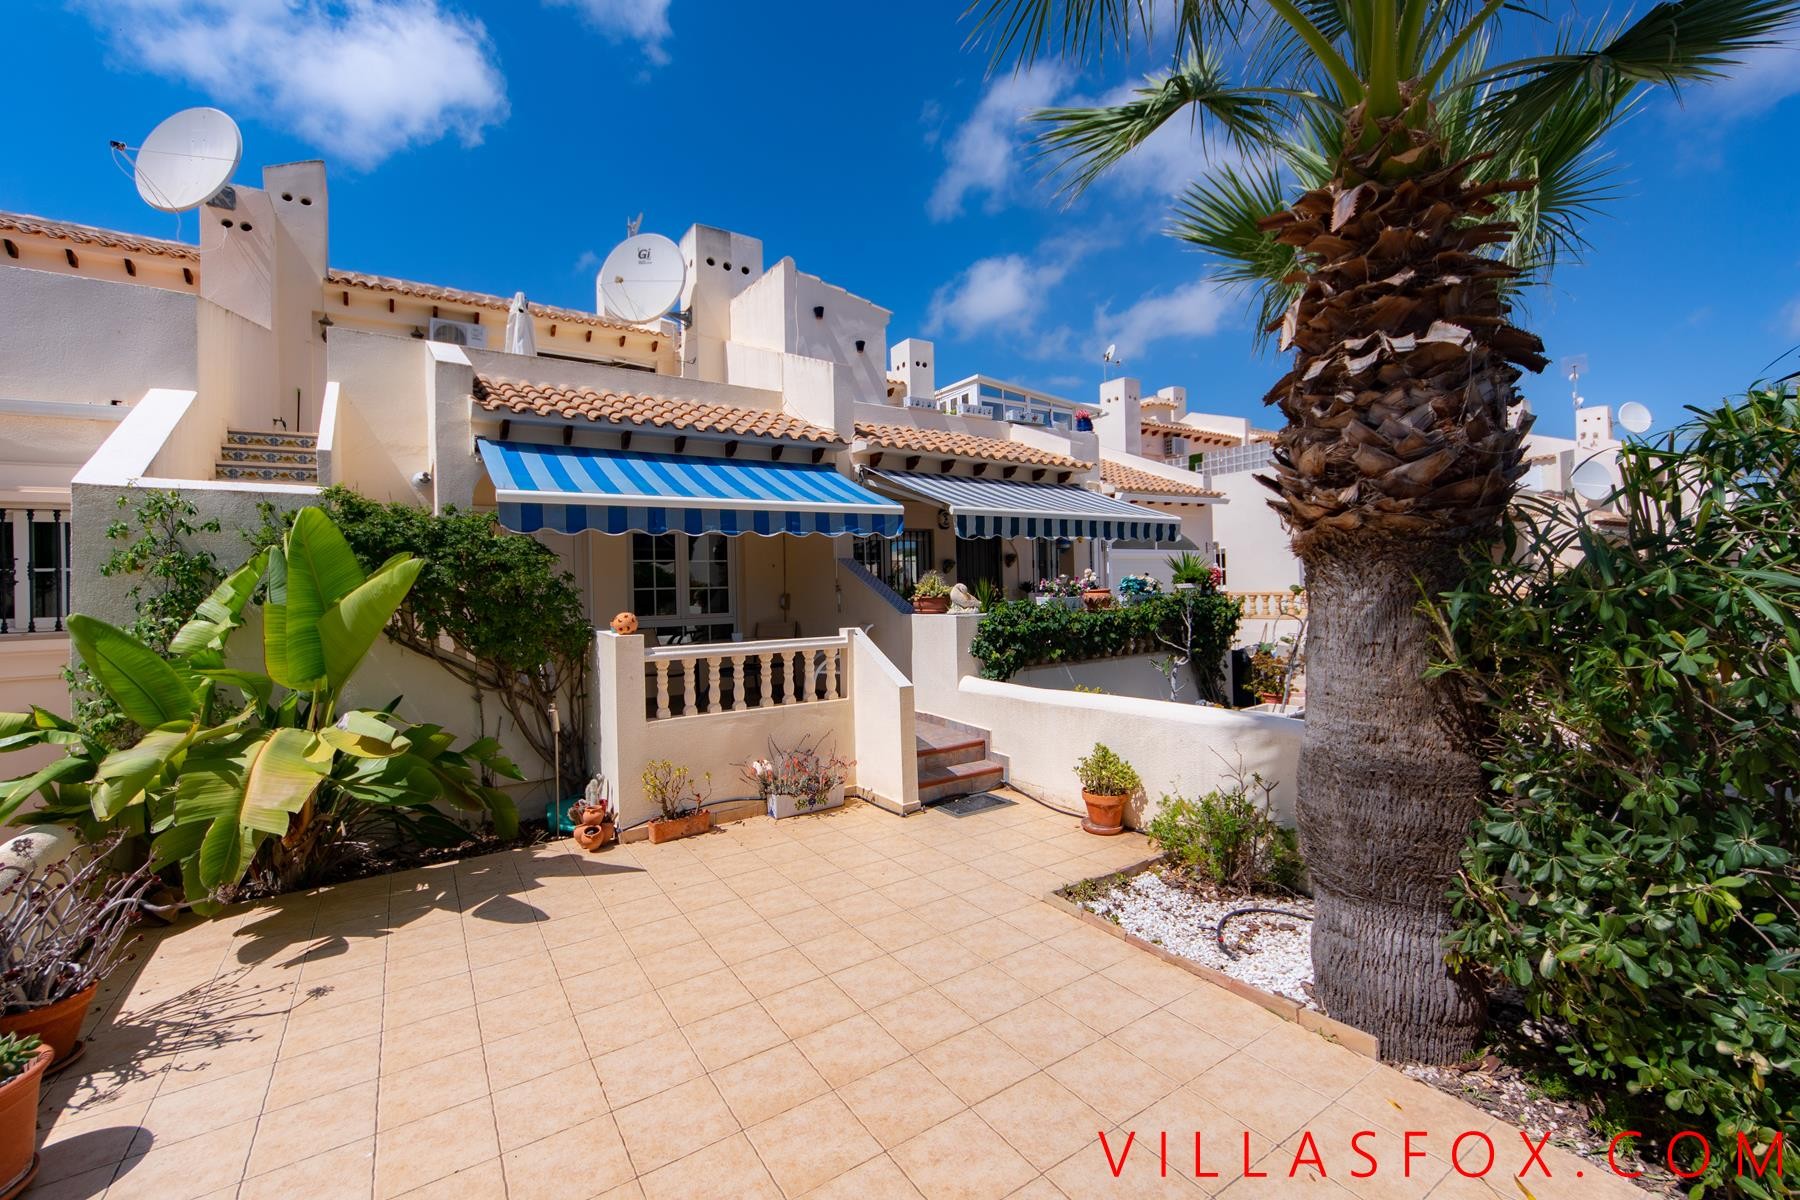 Villa Las Ramblas à vendre au meilleur prix Villas Fox DSC0058661391357bd5b8 1